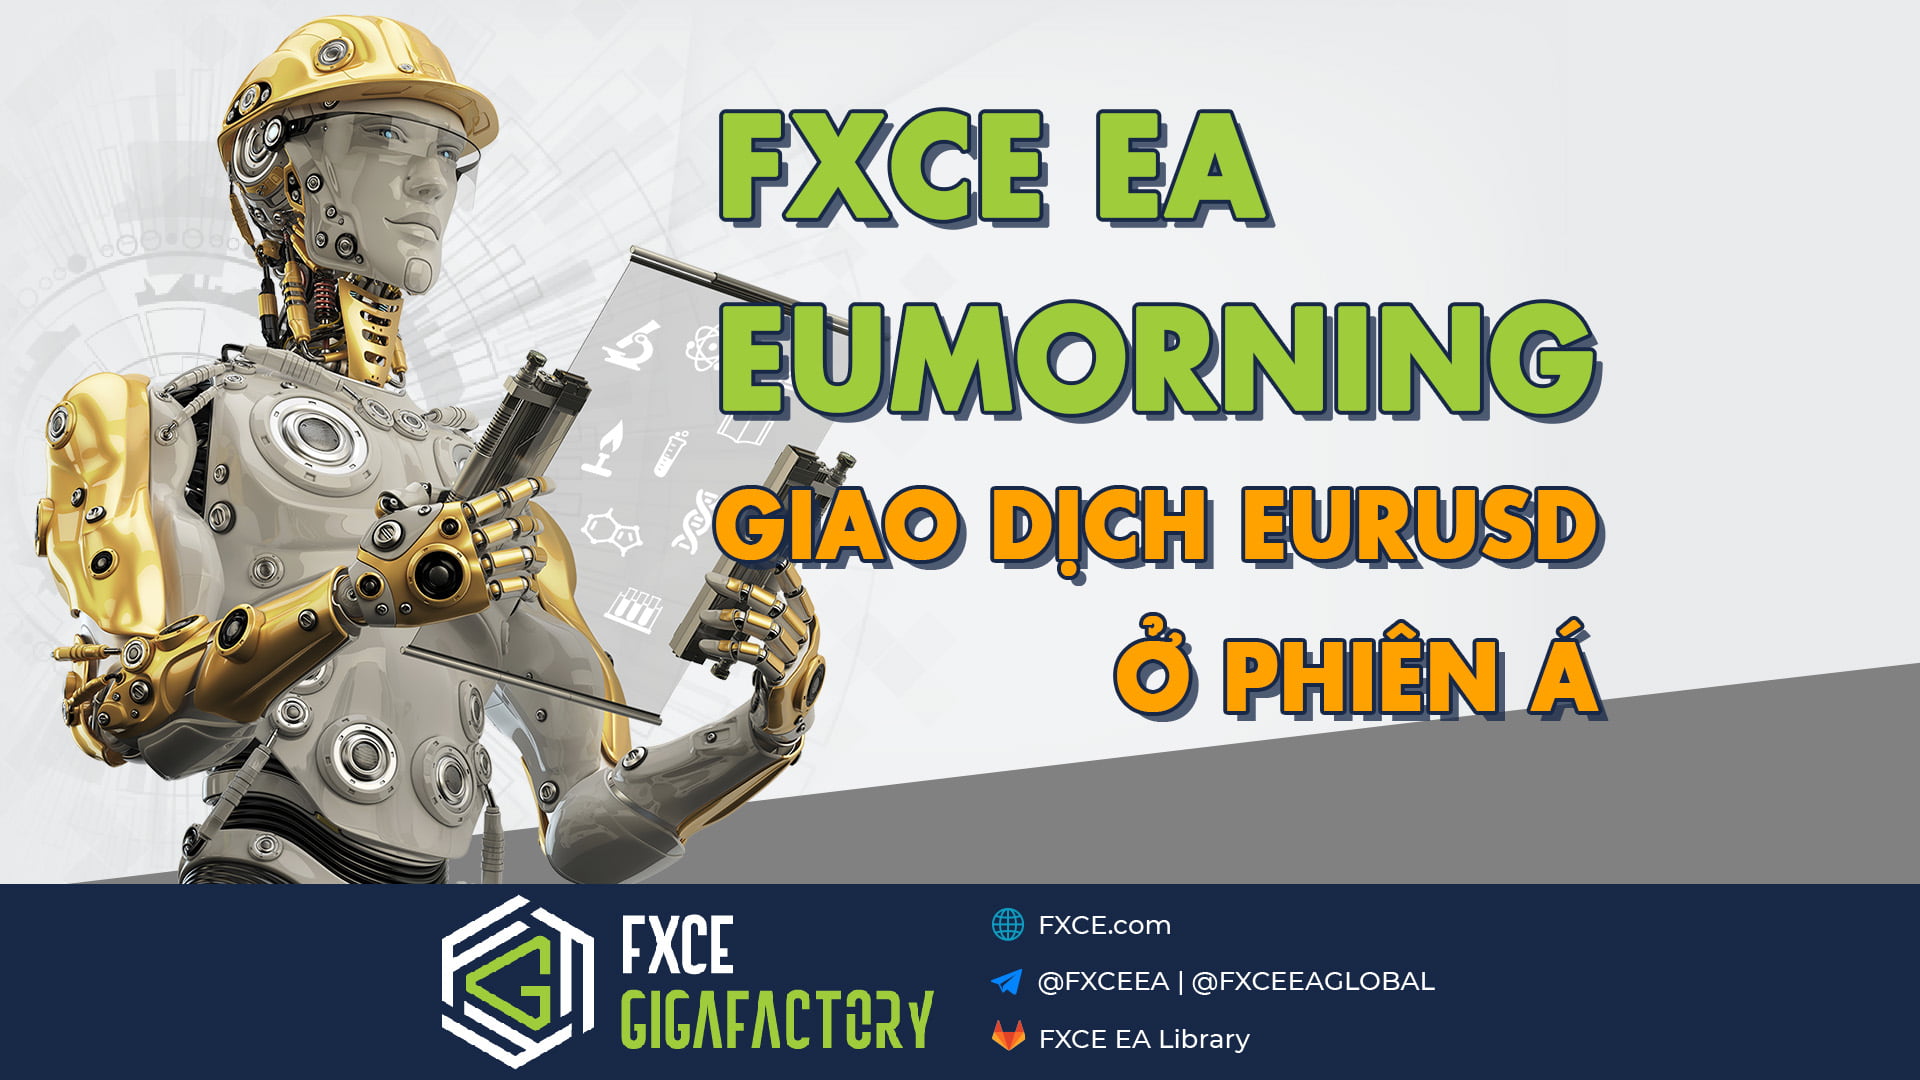 FXCE EA EUMorning - Giao dịch EURUSD ở phiên Á